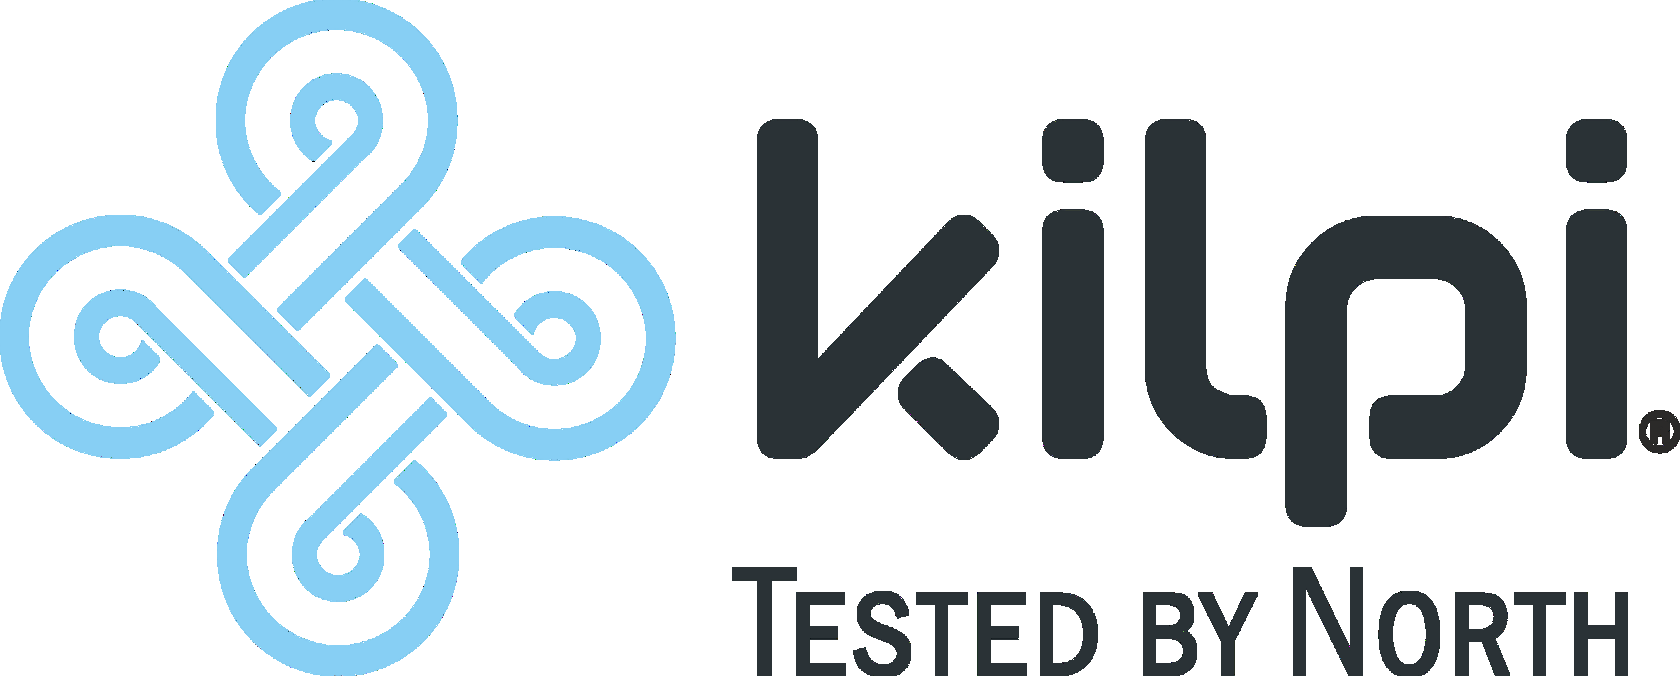 Тест бай. KILPI логотип. Логотип веб дизайнера. KINETIXX одежда логотип. KILPI Tested by North.